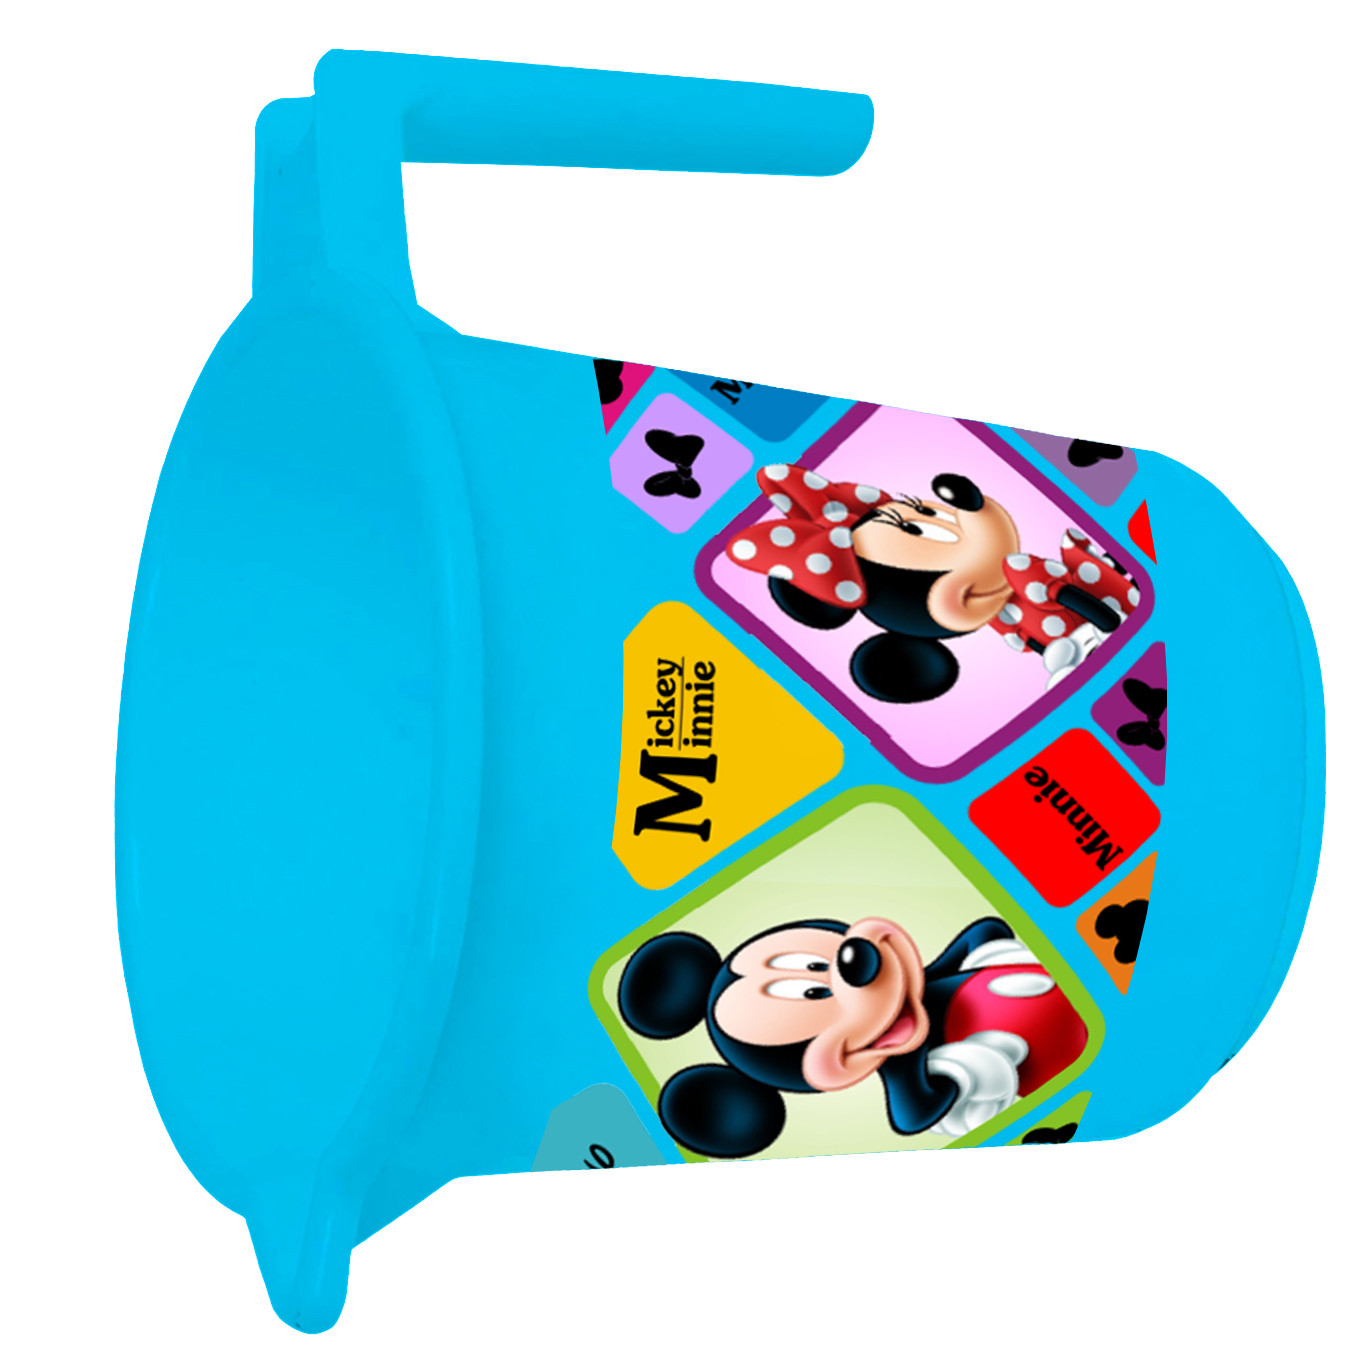 Kuber Industries Disney Mickey Minnie Print 8 Pieces Unbreakable Strong Plastic Bathroom Mug,500 ML (Cream & Blue & Black & White) -HS_35_KUBMART17653